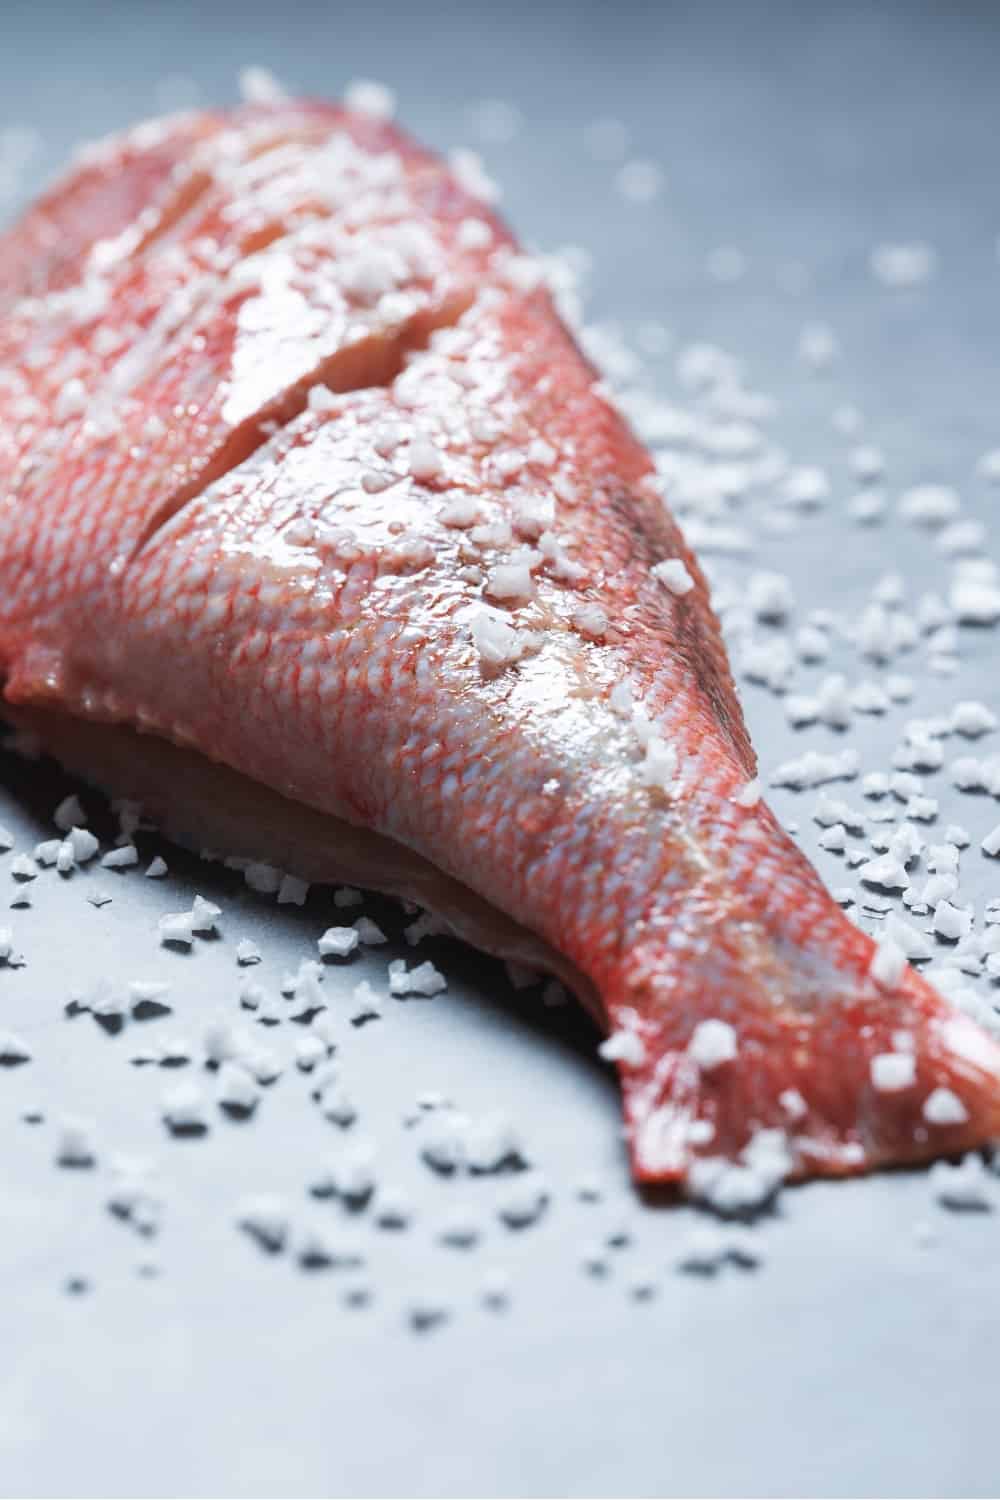 Trimmed red rockfish with salt